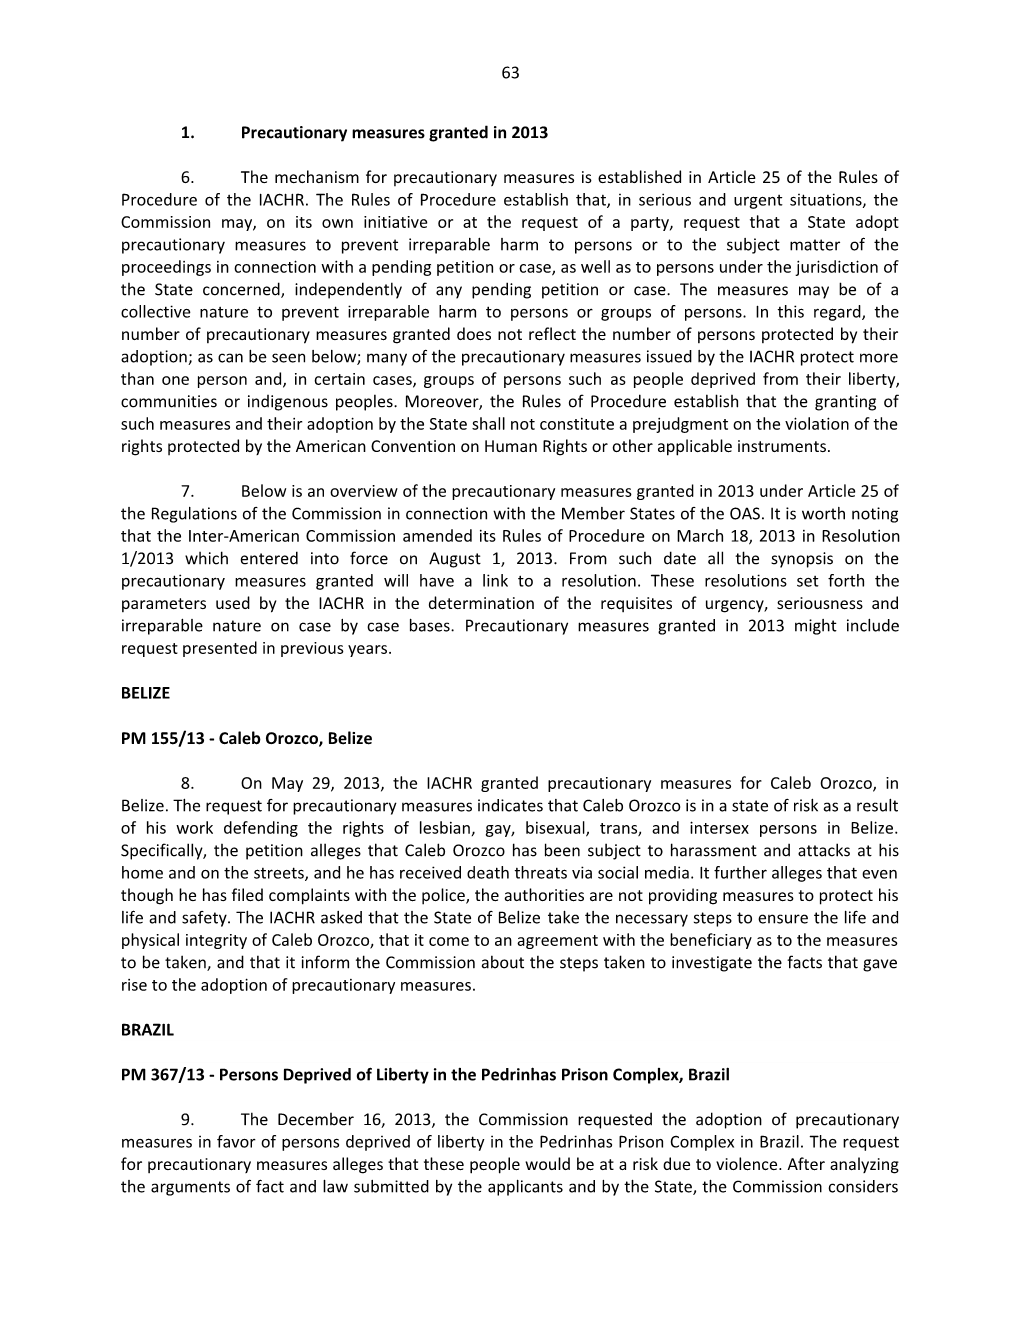 Chapter II.C.1. Precautionary Measures Granted in 2013